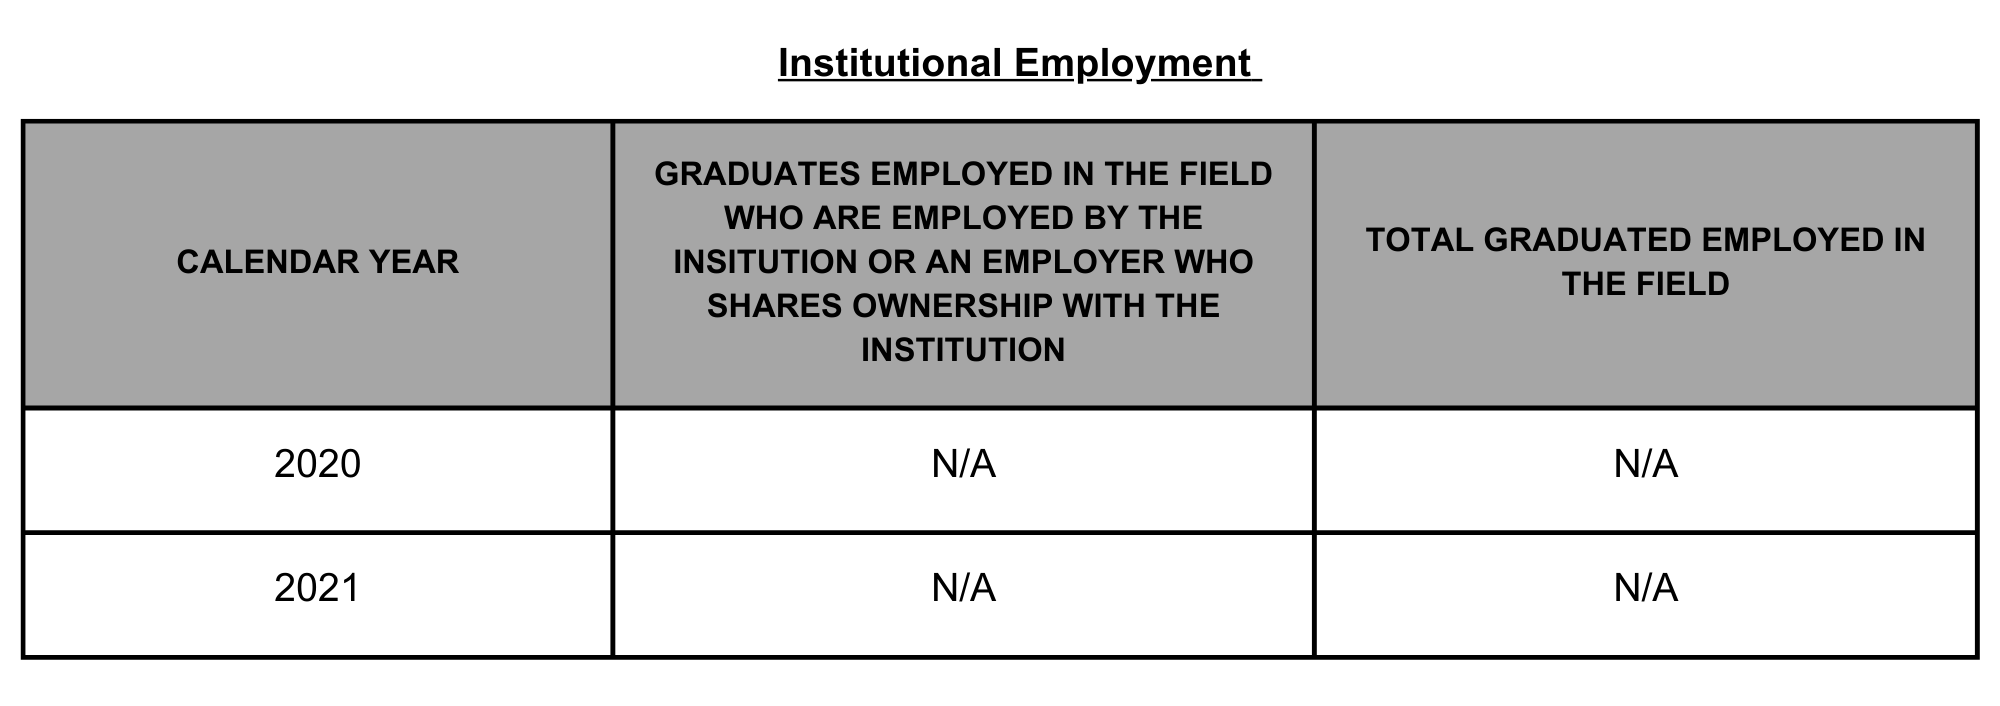 06 SPFS Institutional Employment LVL 2 PIF OL CA